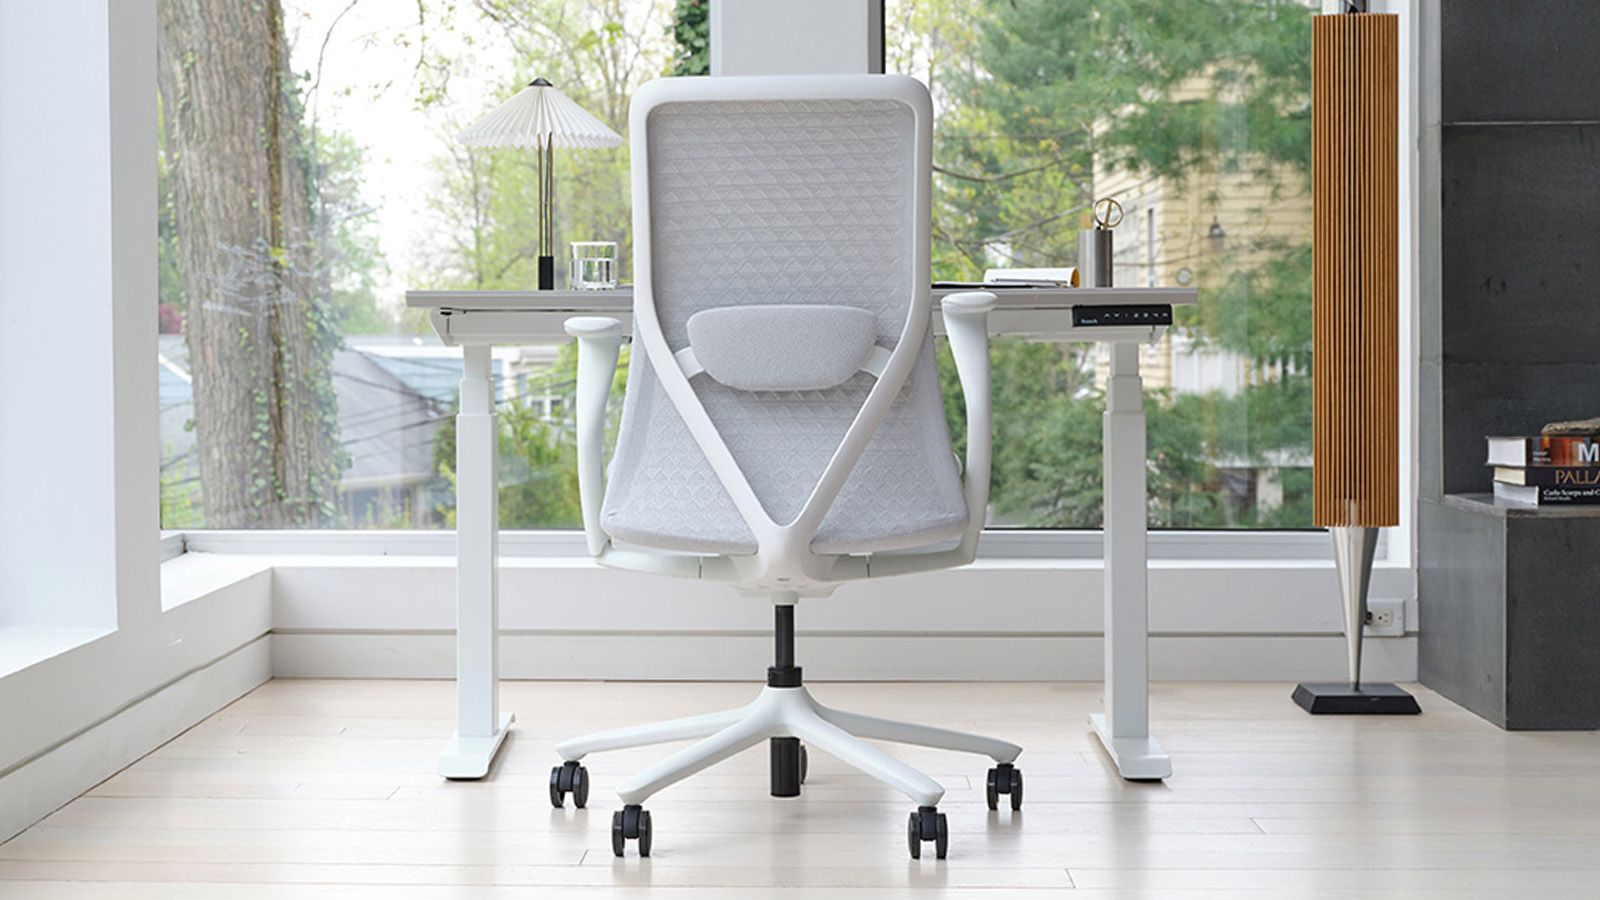 Ergonomic Chair - Ergonomic Office Chair - Ergo Chair